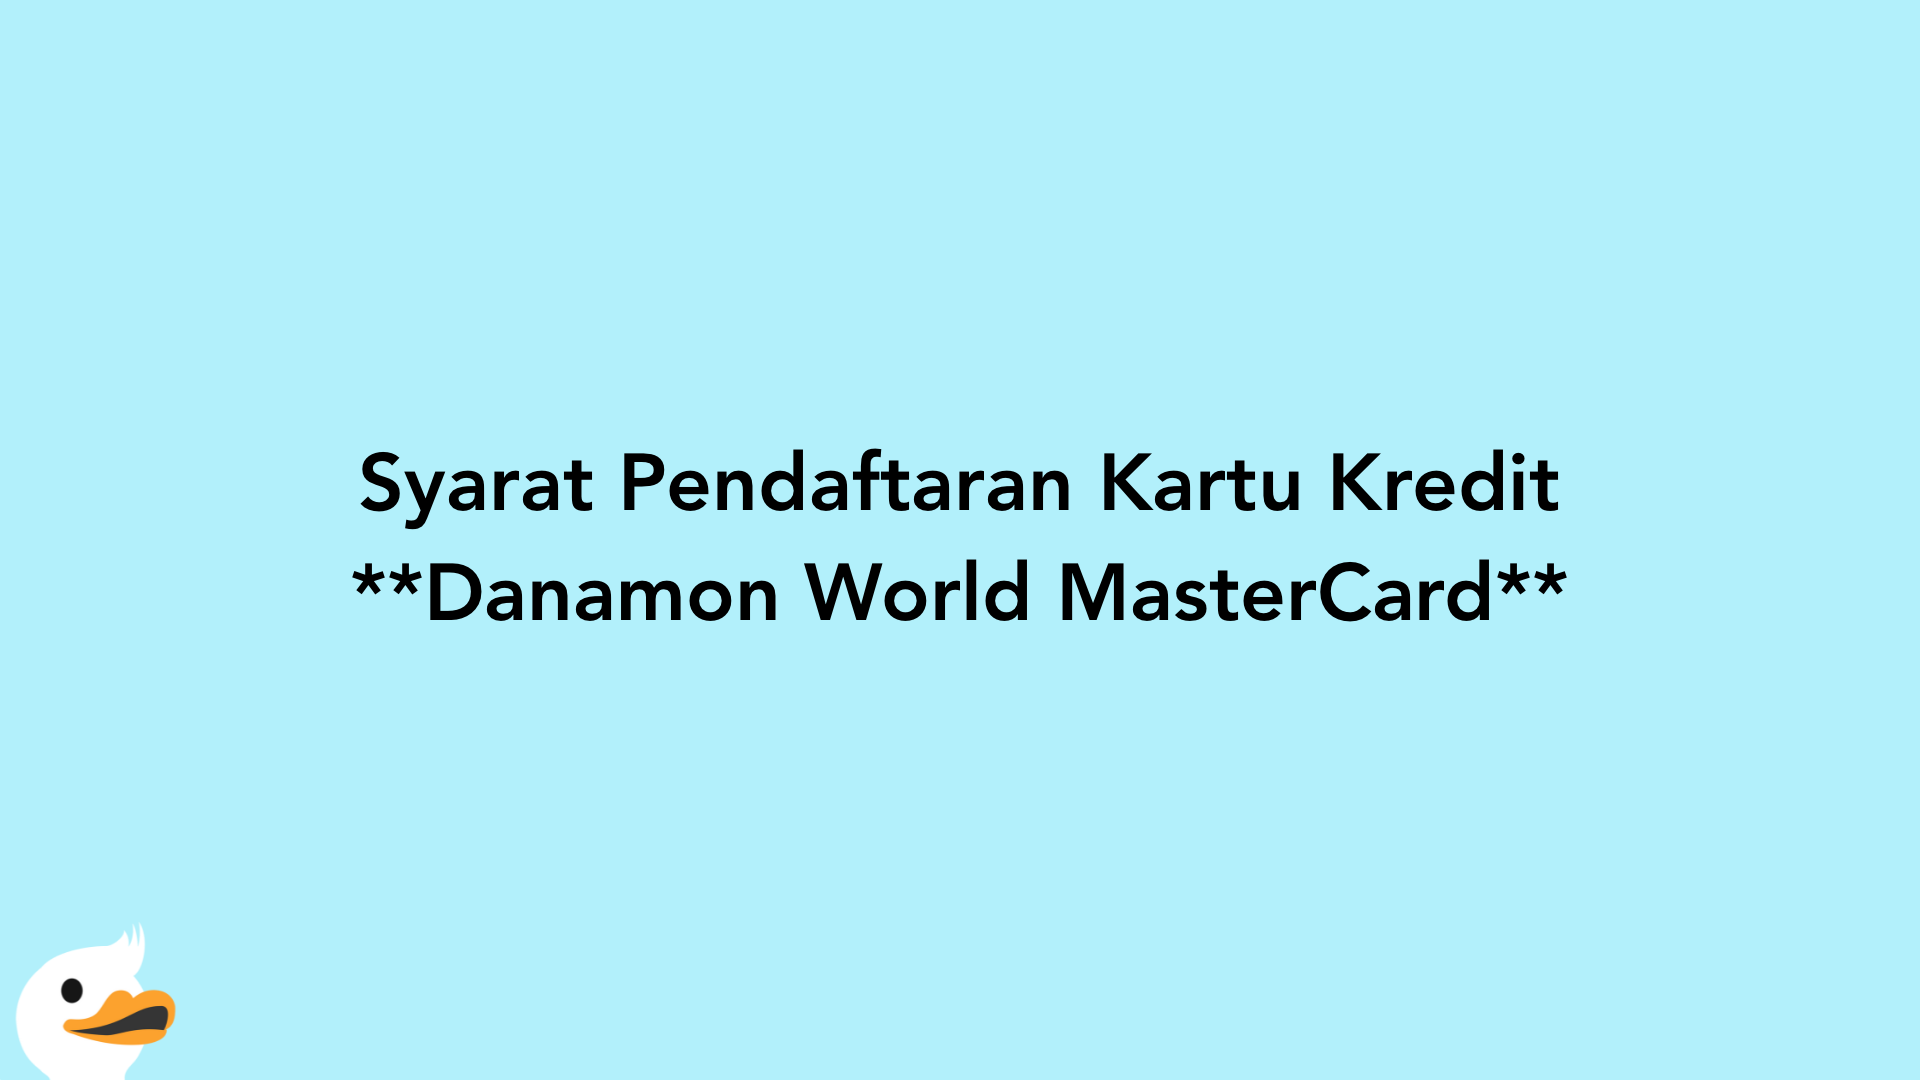 Syarat Pendaftaran Kartu Kredit Danamon World MasterCard